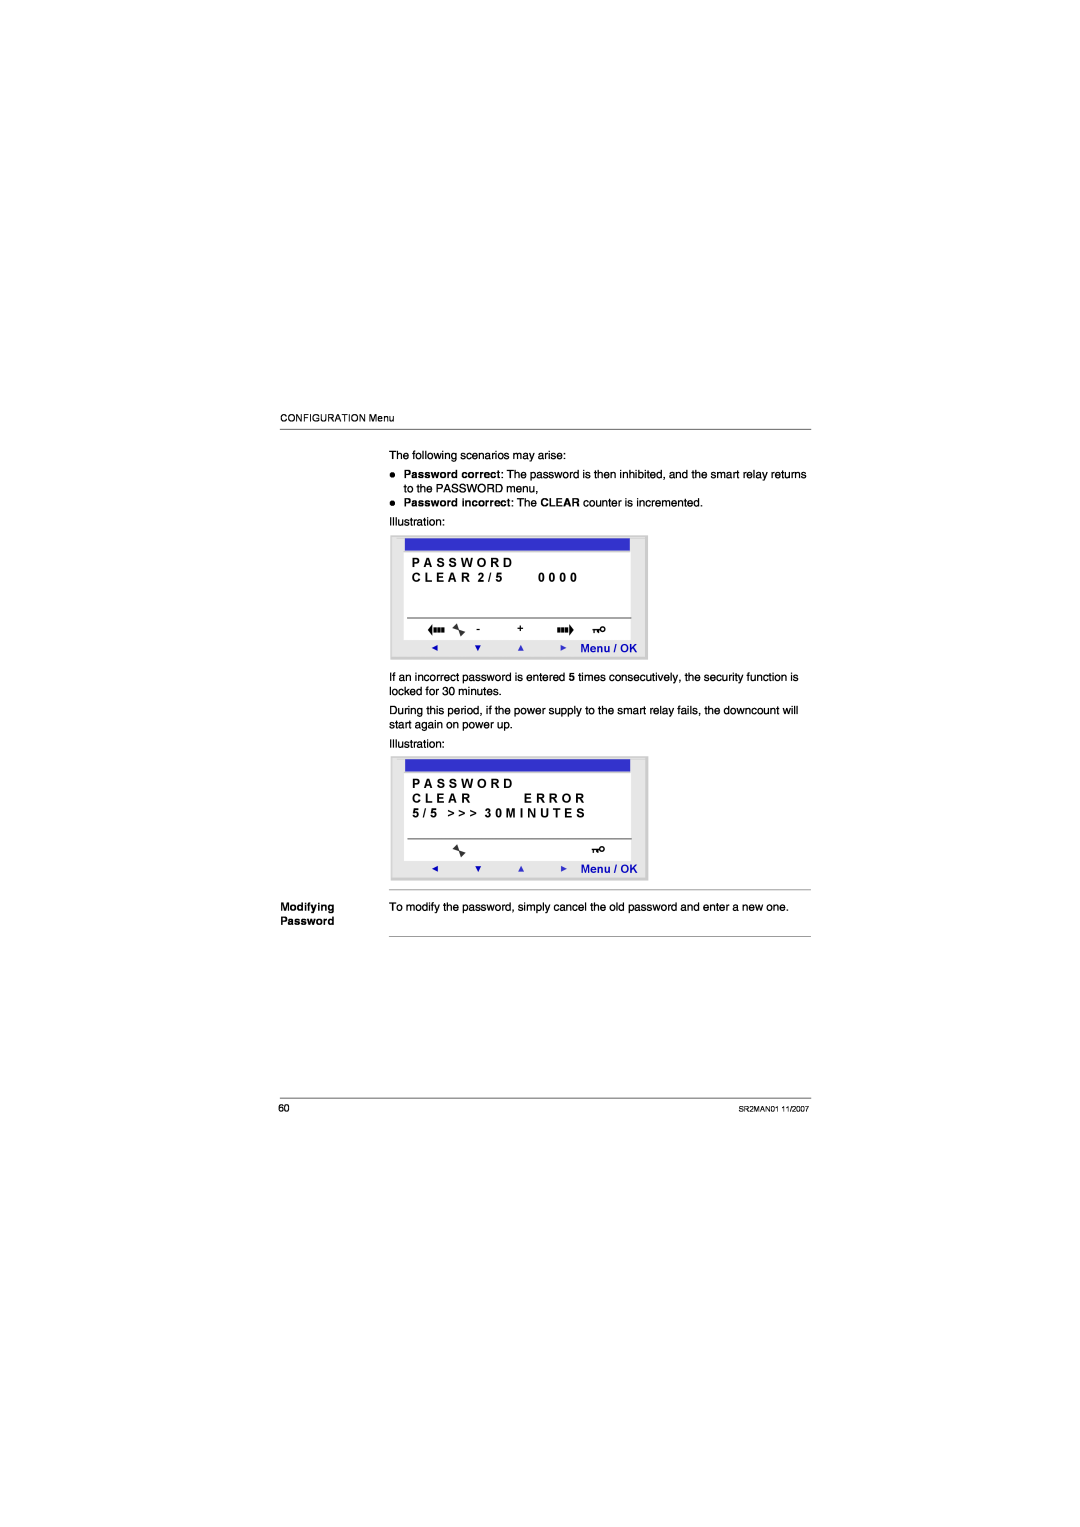 Schneider Electric SR2MAN01 user manual Illustration, Menu / OK, Modifying, Password 